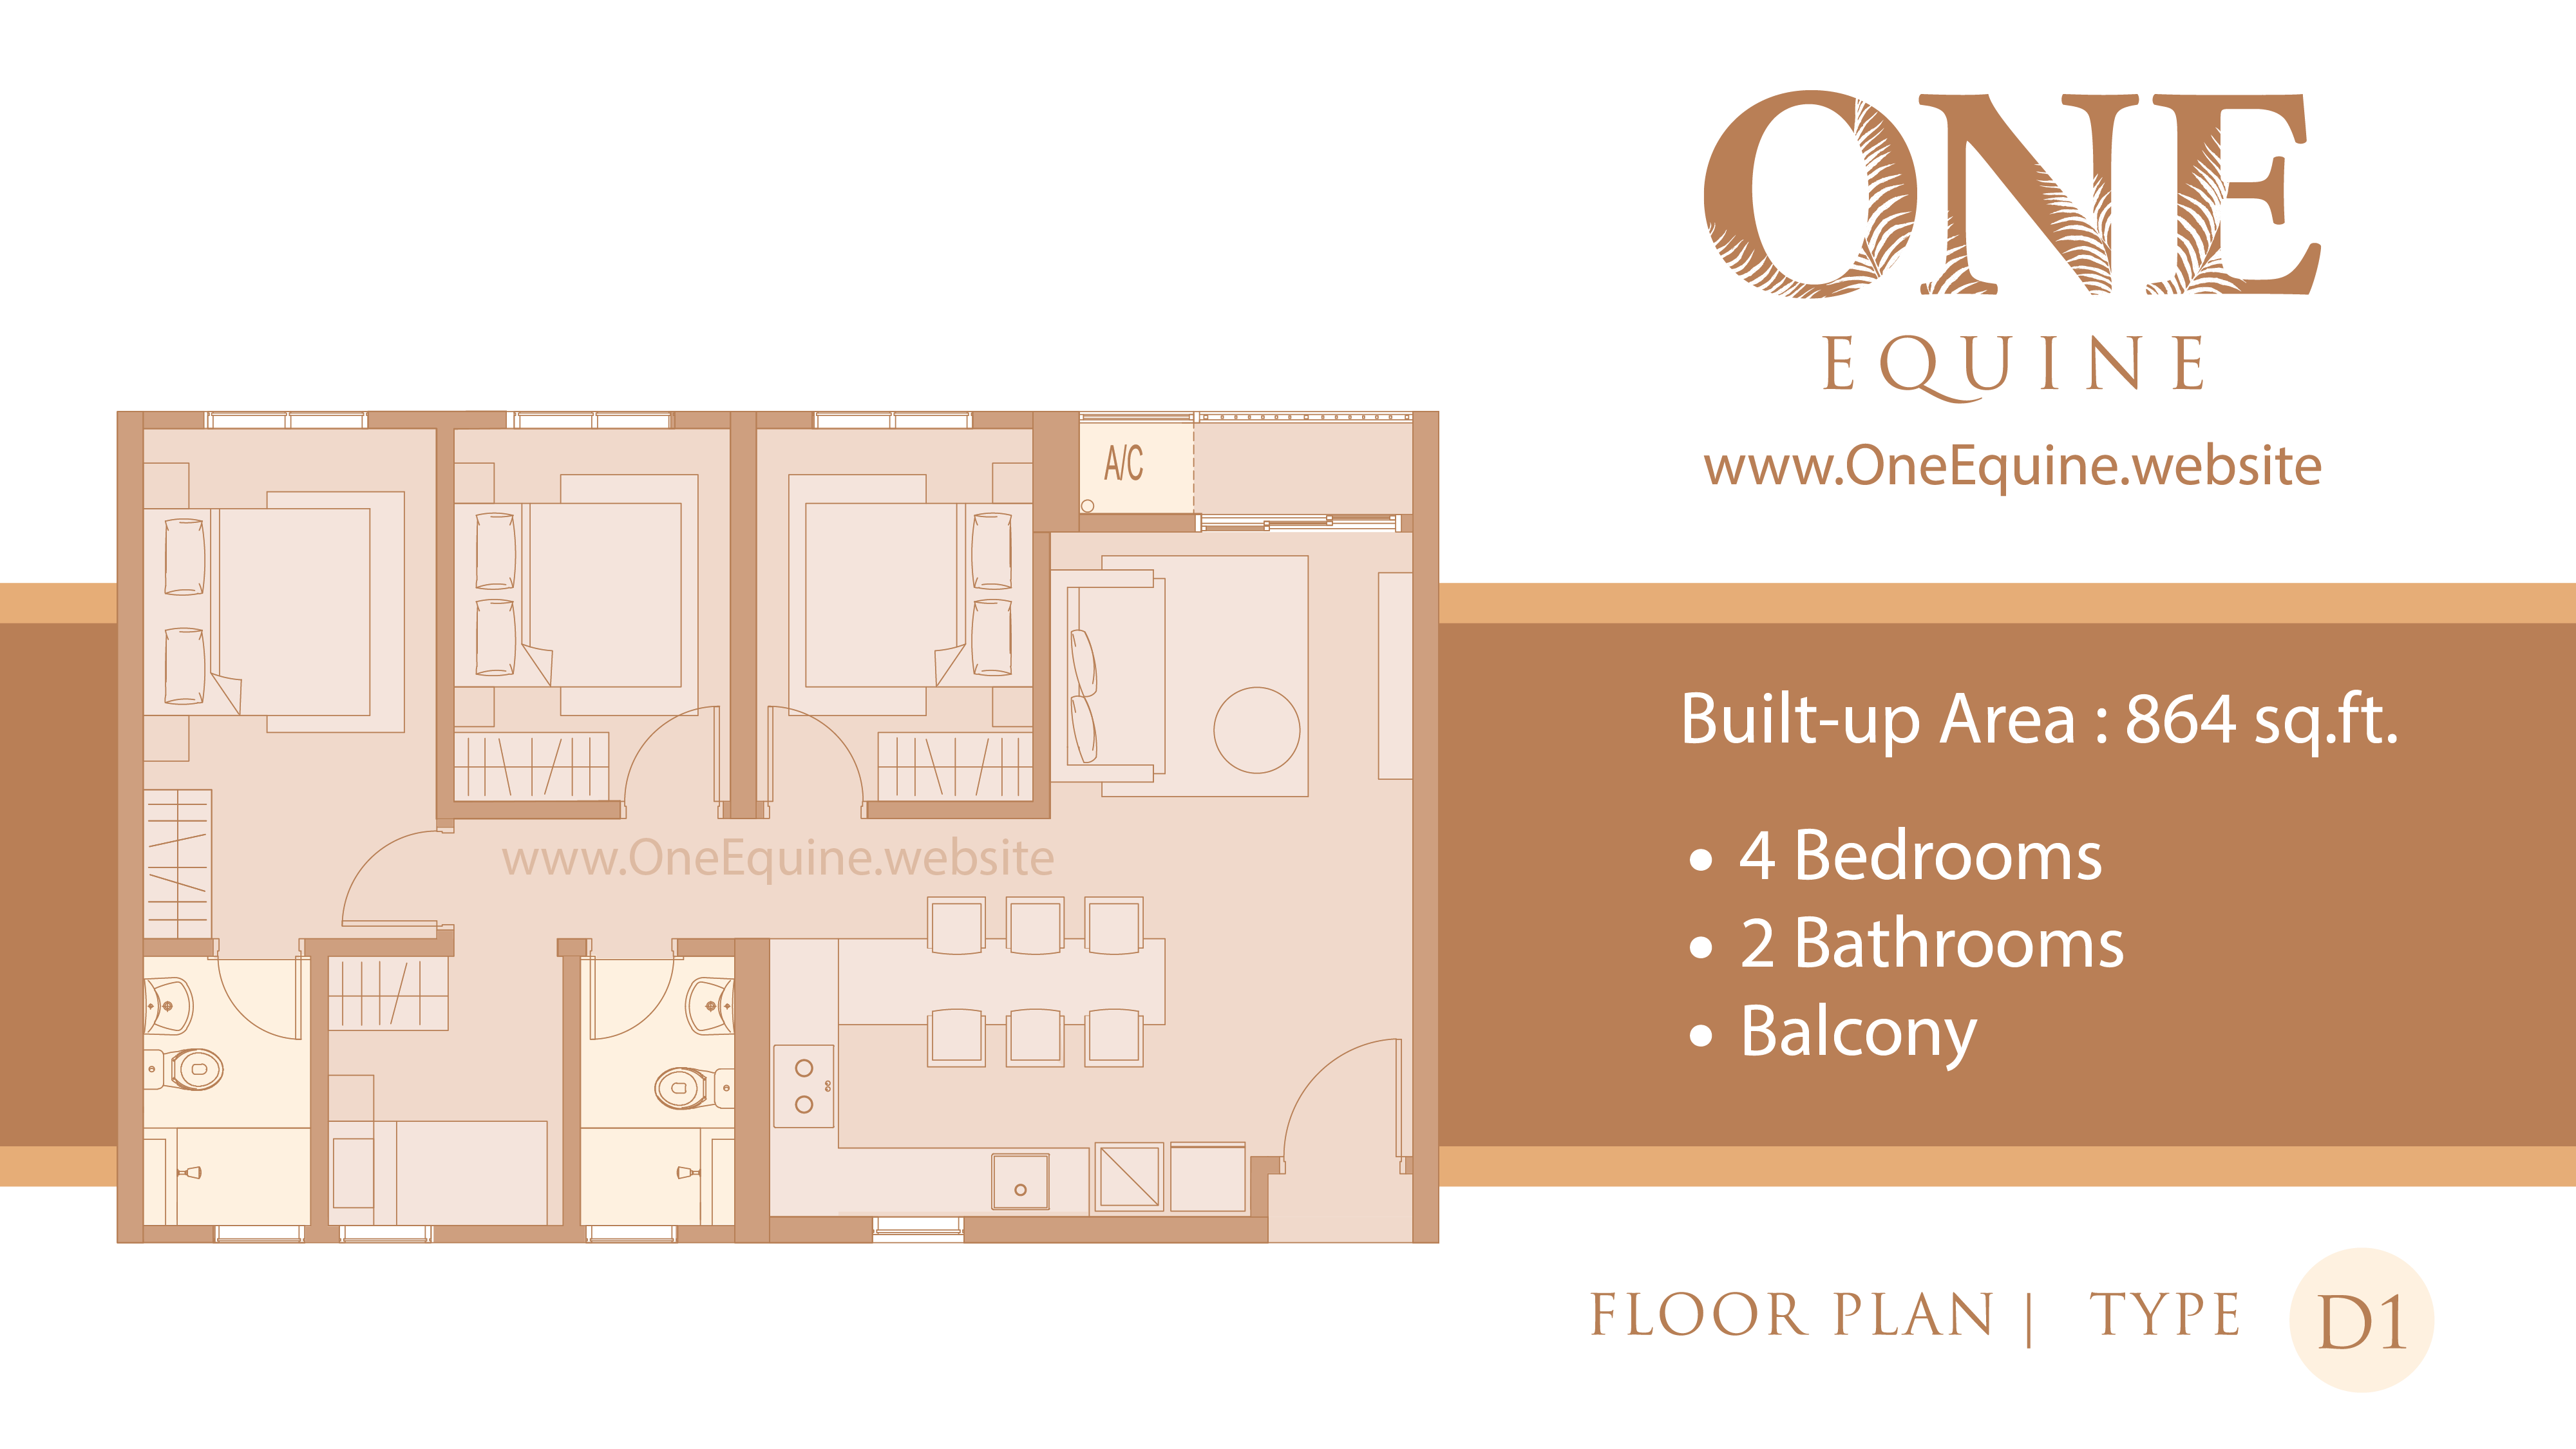 One Equine Park Seri Kembangan - Serviced Apartment 4 Bedrooms 2 Bathrooms Balcony - Floor Plan Type D1 - 864 sqft